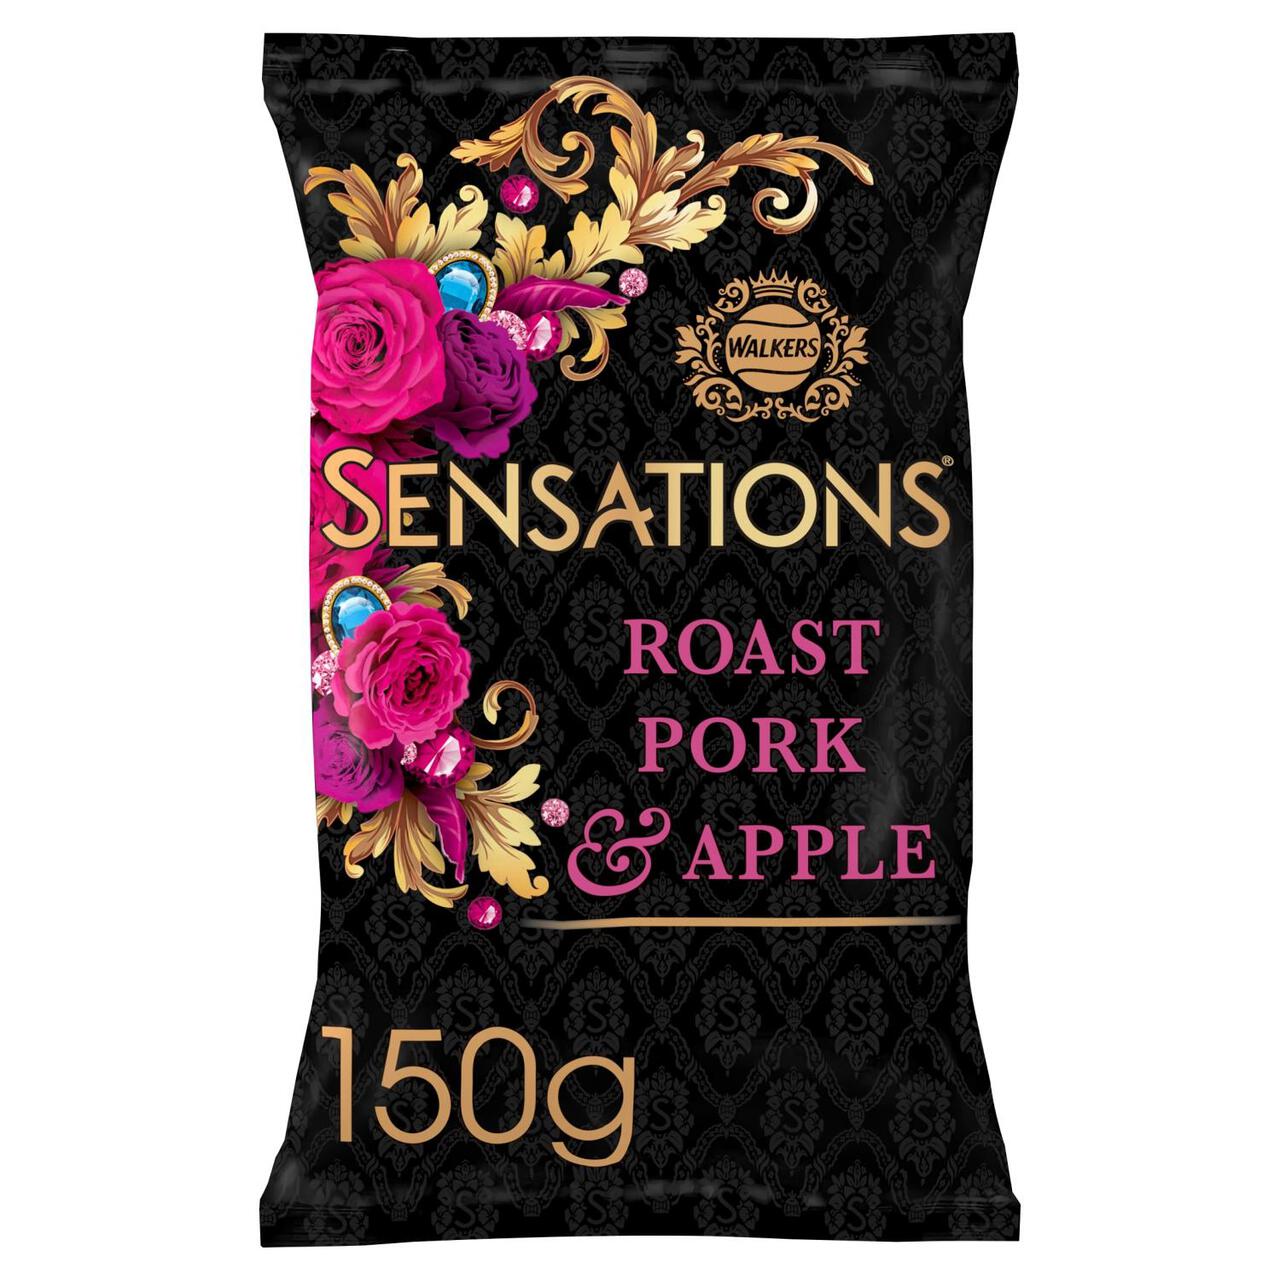 Sensations Jubilee Limited Edition Roast Pork & Apple Sharing Crisps 150g